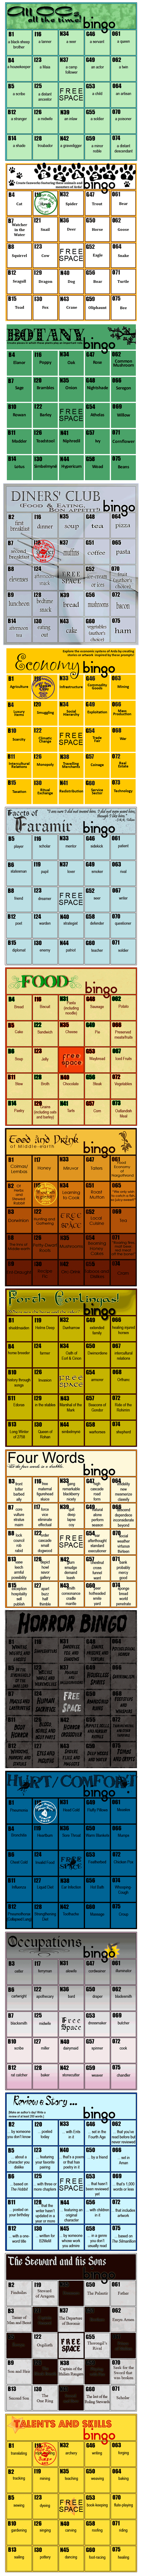 Branwyn's Bingo Cards